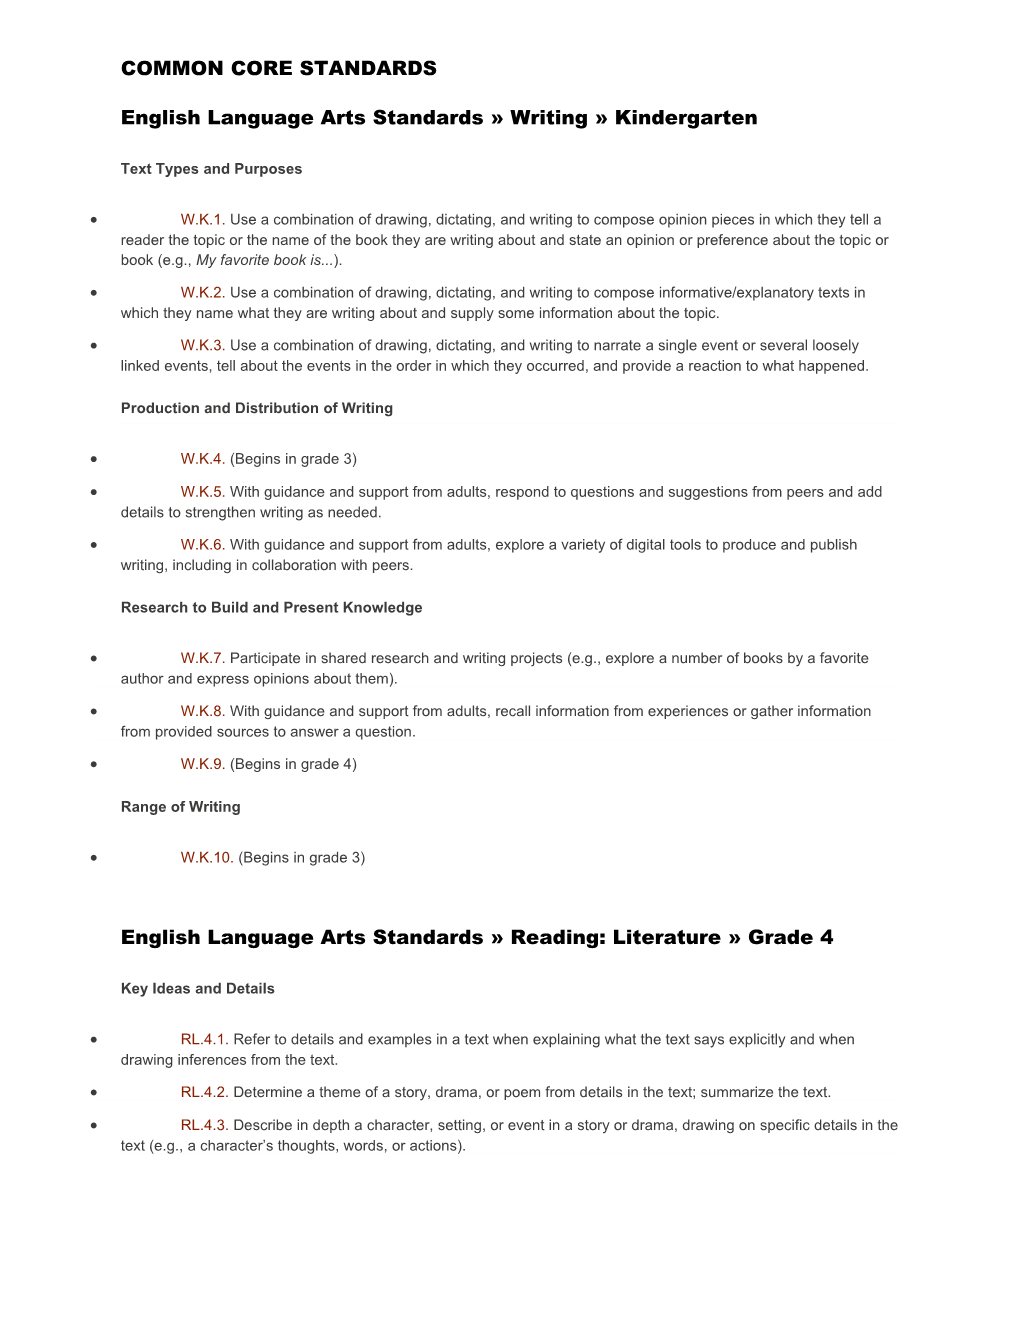 English Language Arts Standards Writing Kindergarten